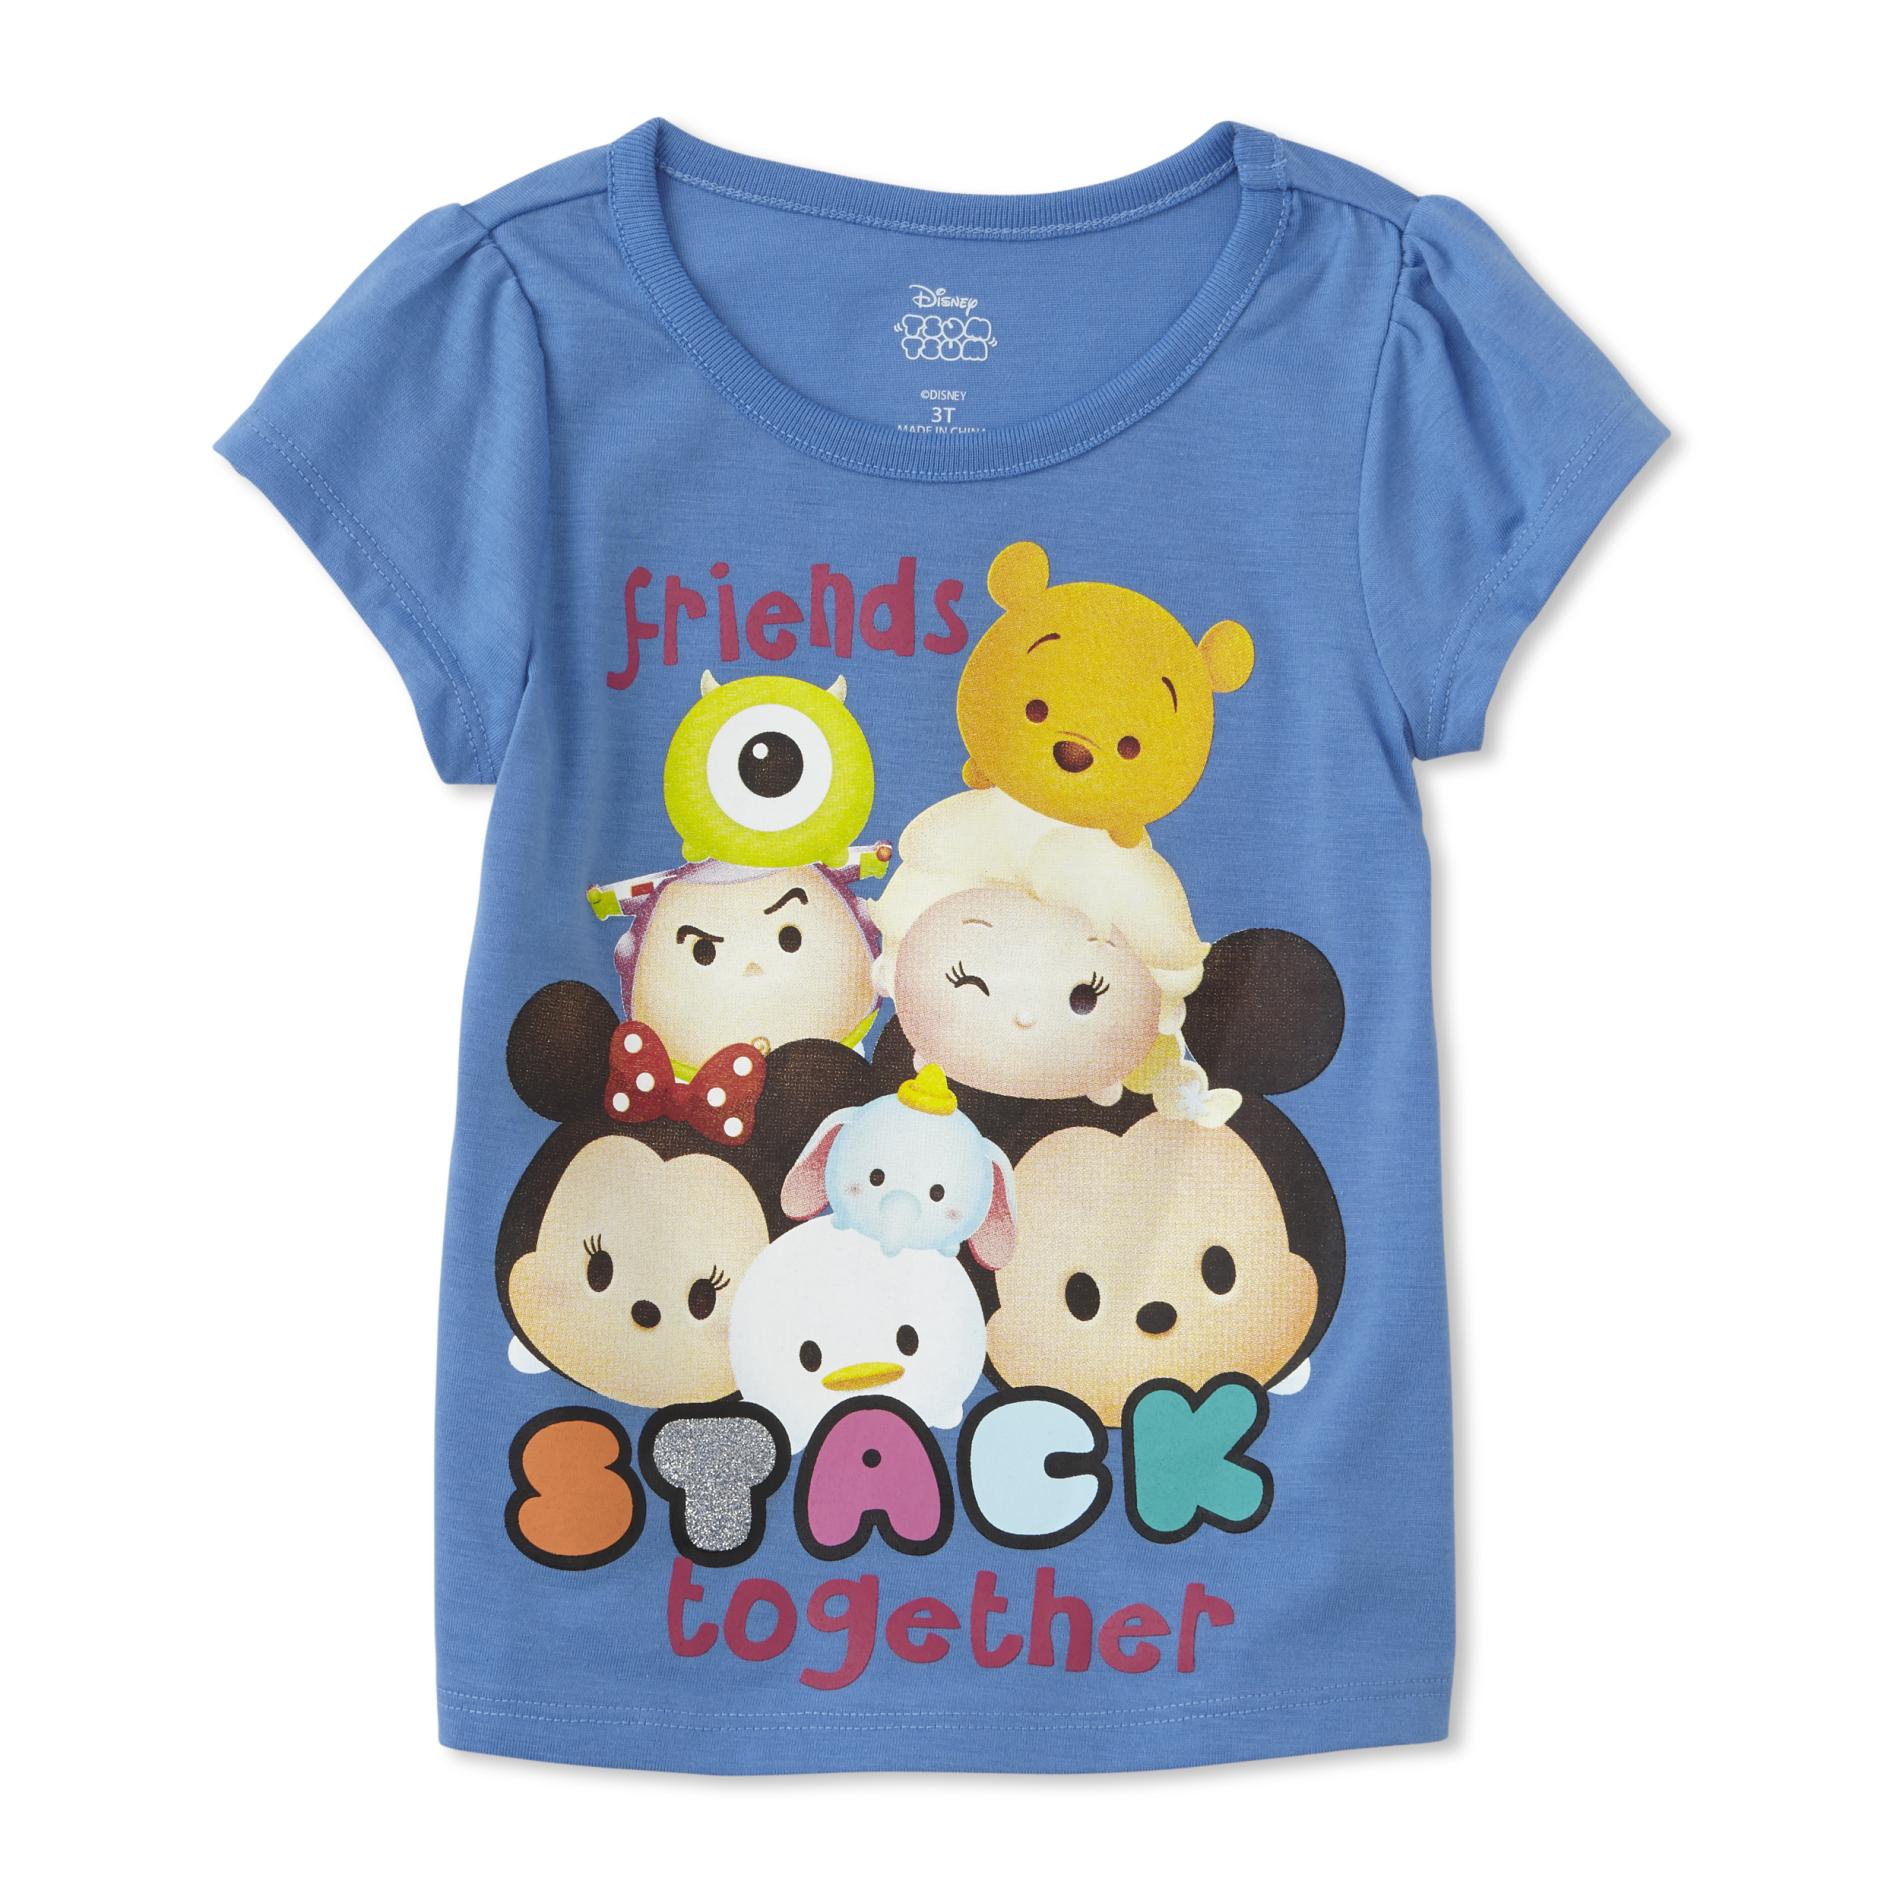 Disney Tsum Tsum Toddler Girls' Graphic T-Shirt - Stack Together